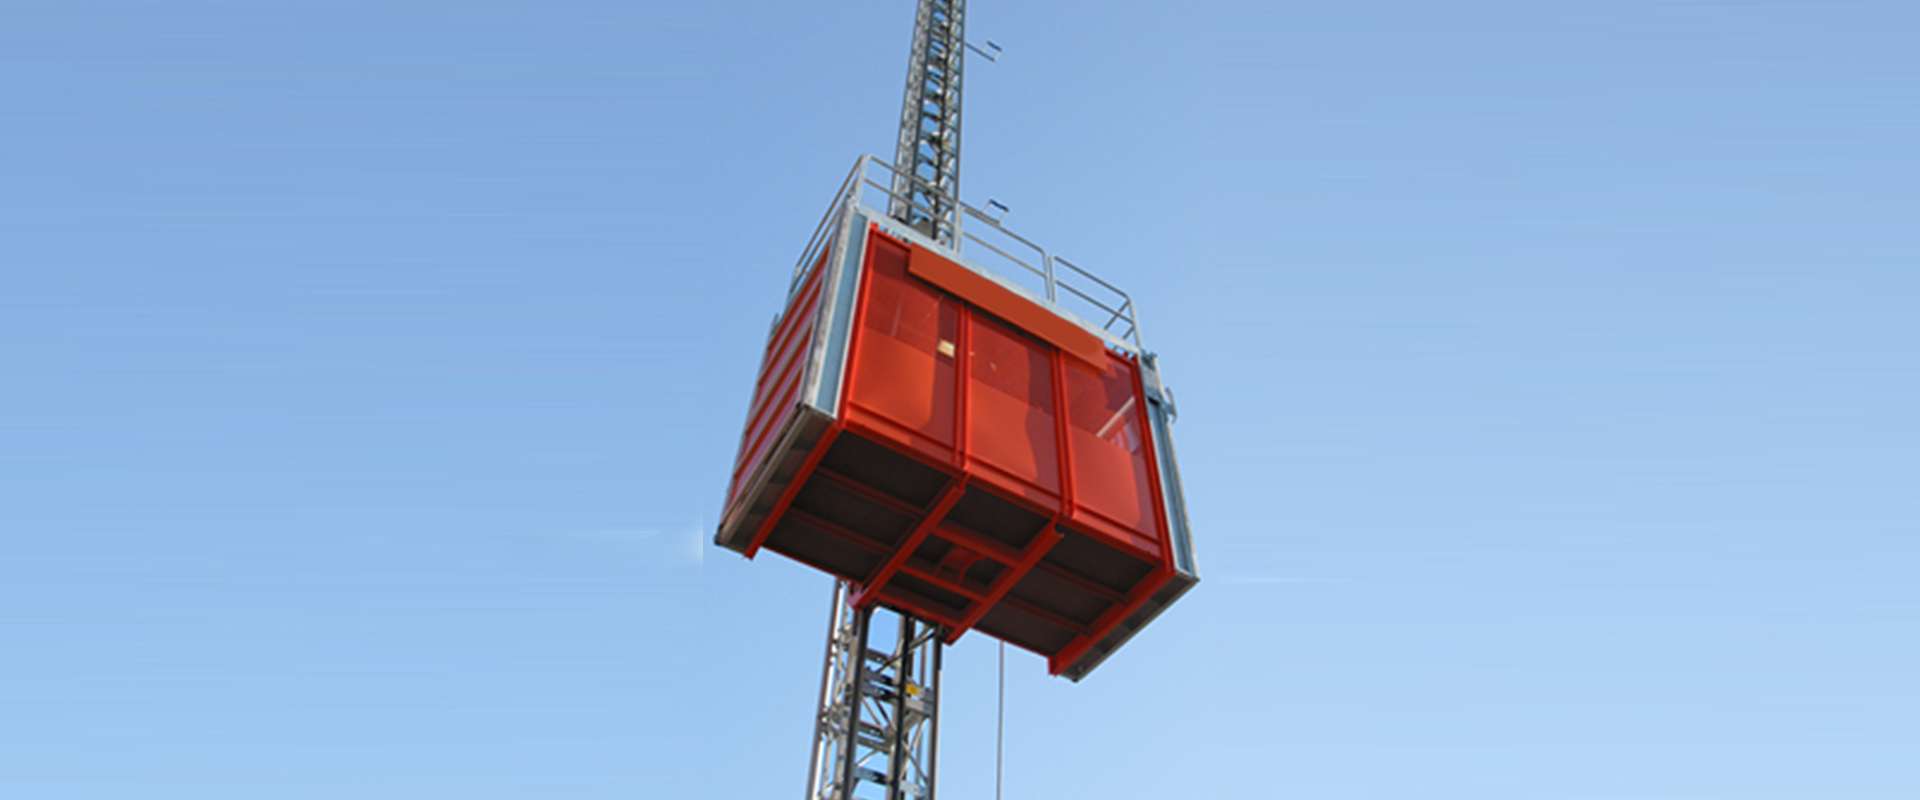 industrial platform lift